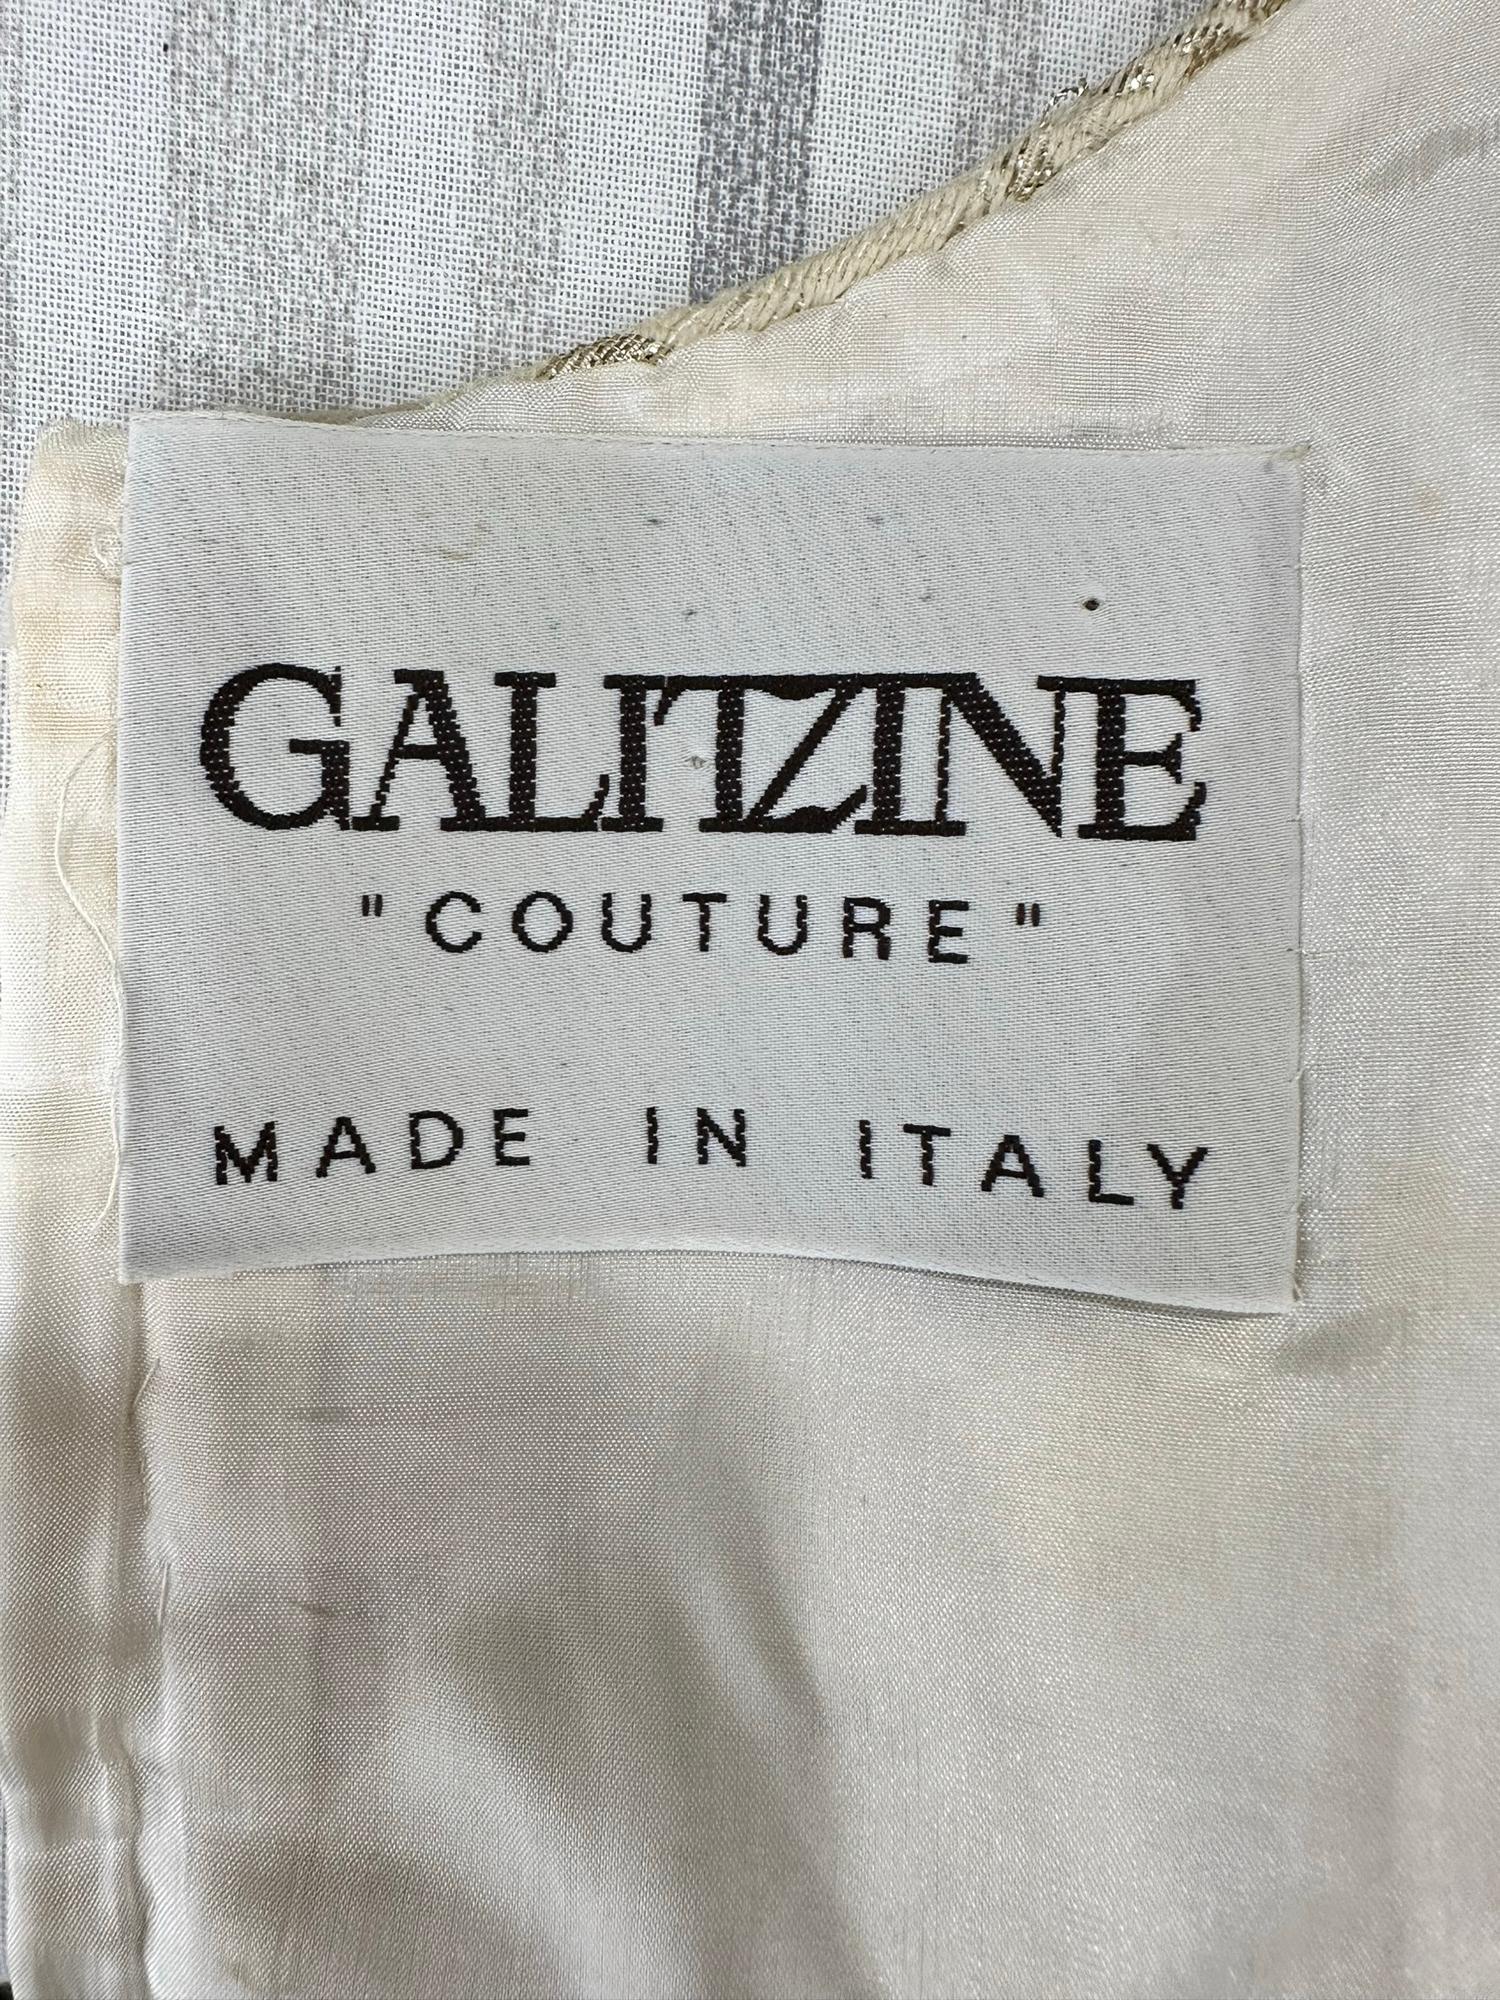 Galitizne Couture Renaissance Style Gown in Cream & Gold Metallic Brocade 1970s For Sale 12